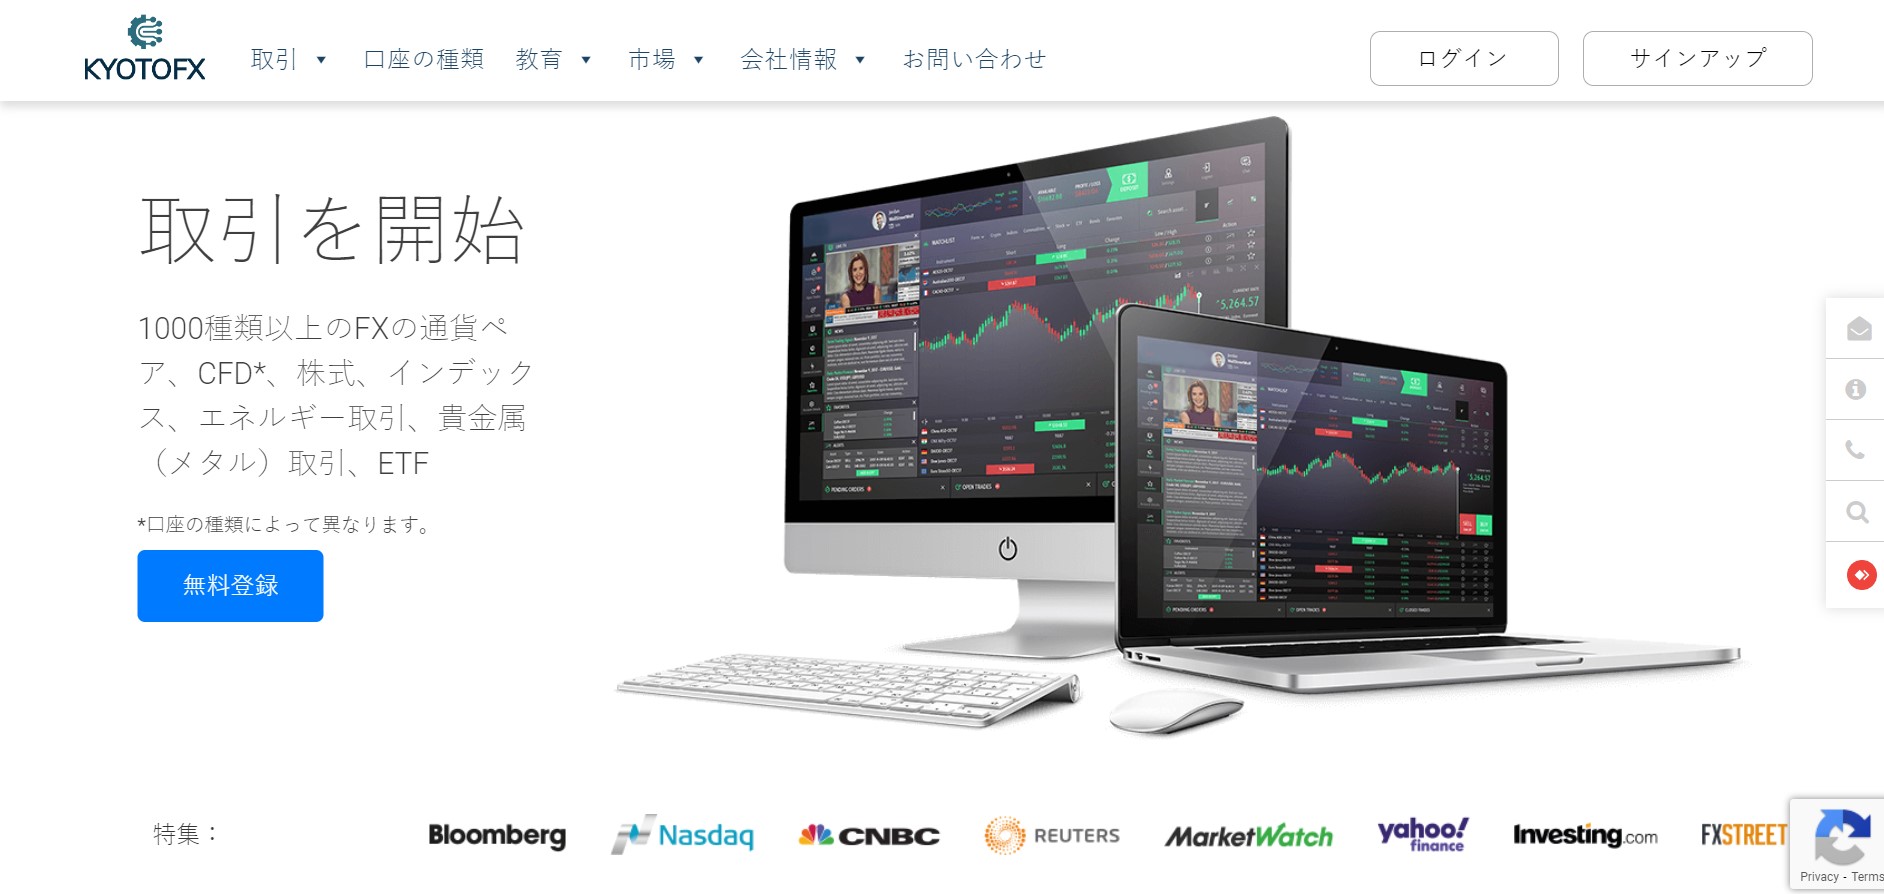 Kyotofx website